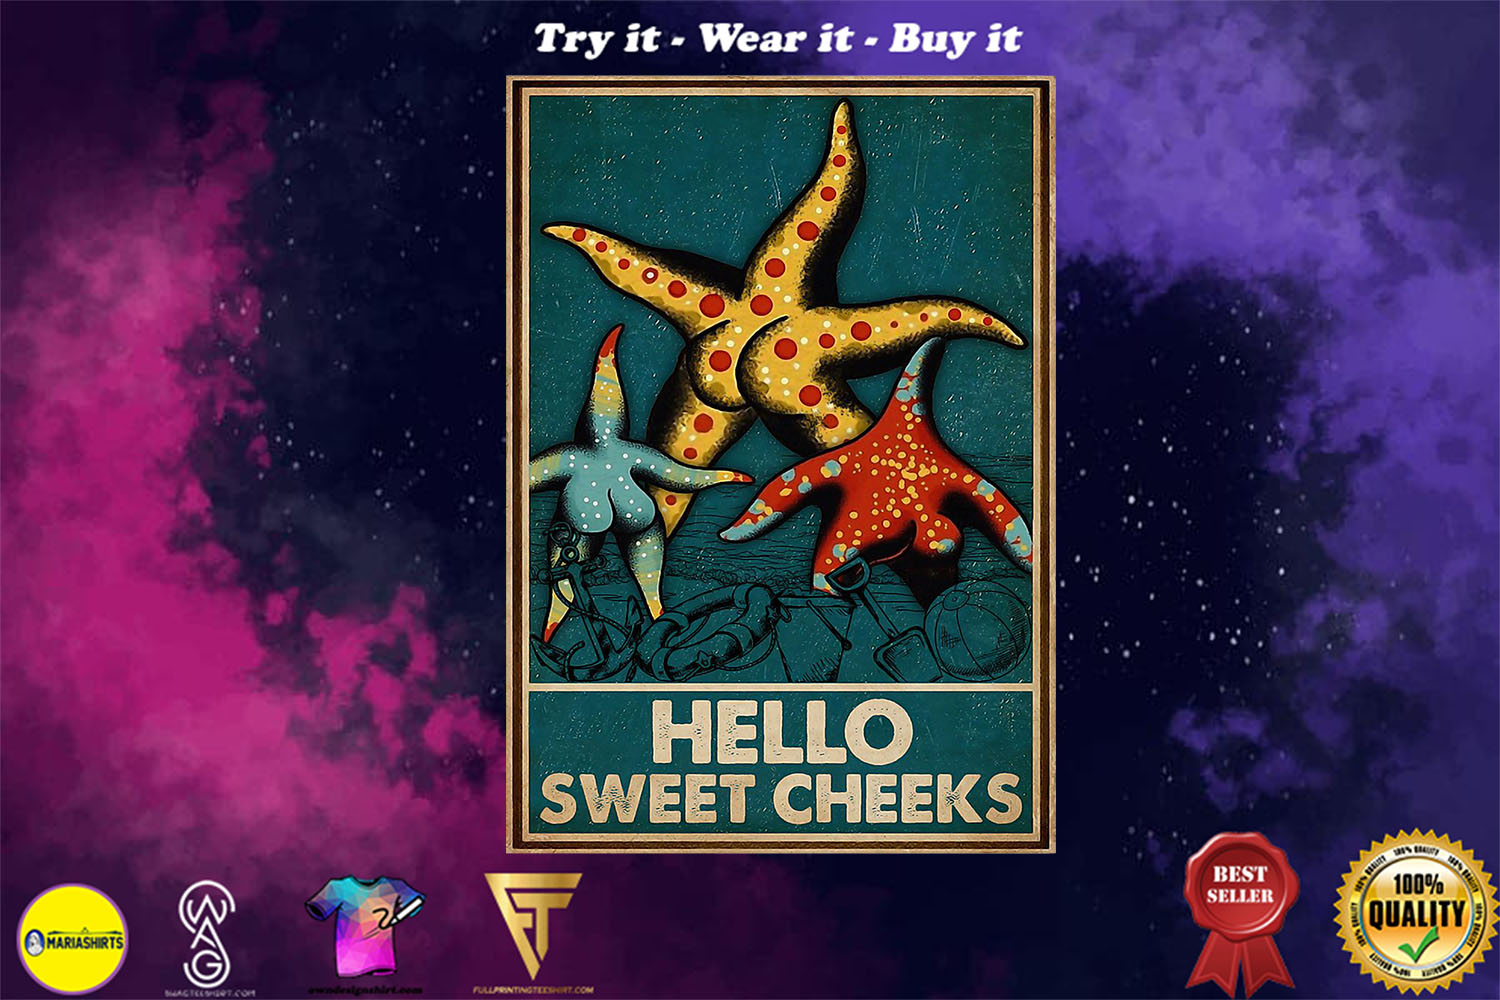 Starfish hello sweet cheek vintage poster